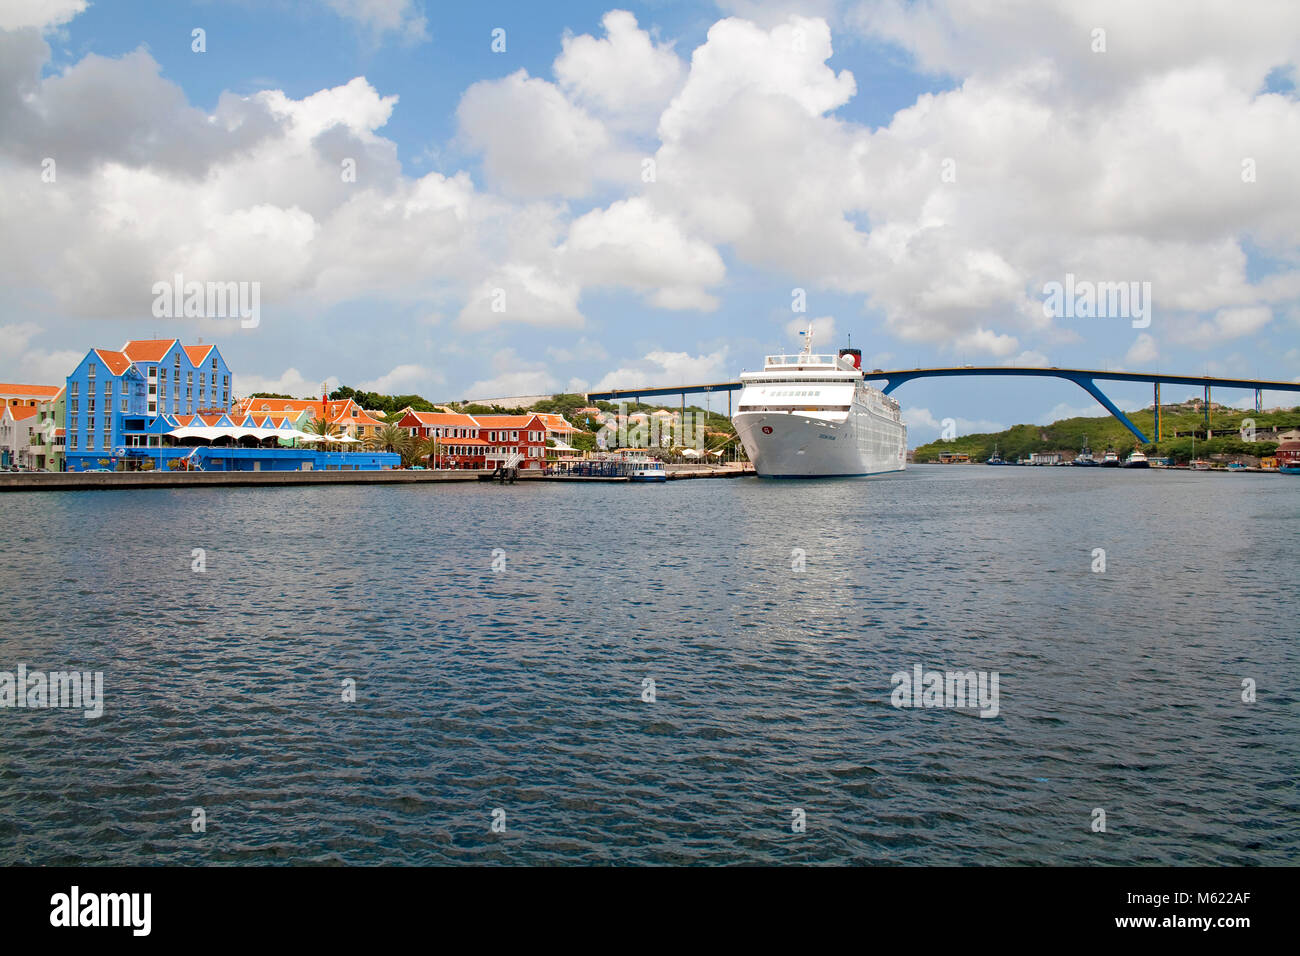 Cruise ship at Sint Anna Baai, Otrobanda district, Queen-Juliana bridge, Willemstad, Curacao, Netherlands Antilles, Caribbean Stock Photo